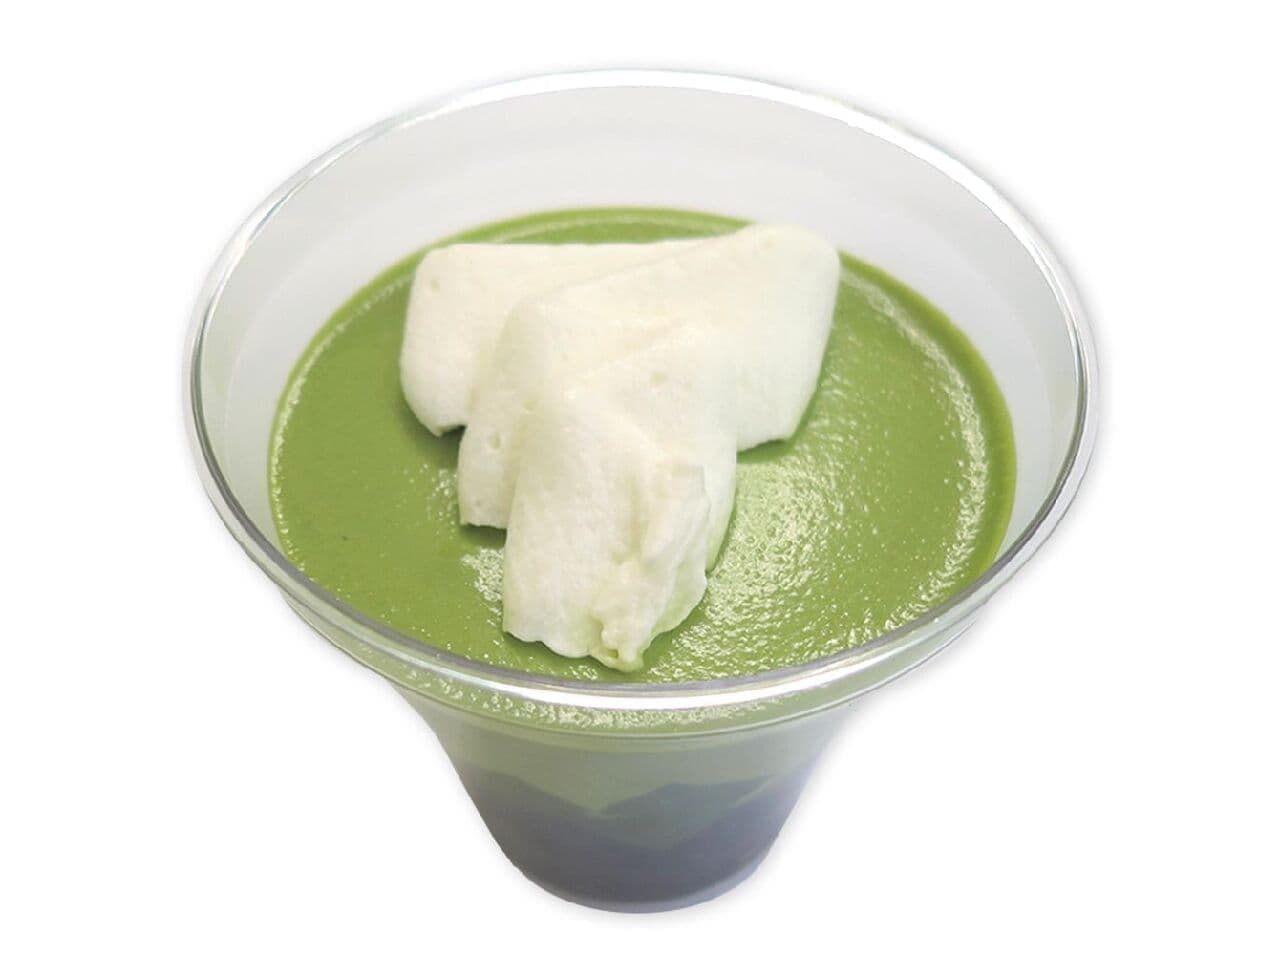 7-ELEVEN "Uji Green Tea Latte Cold Warabi".